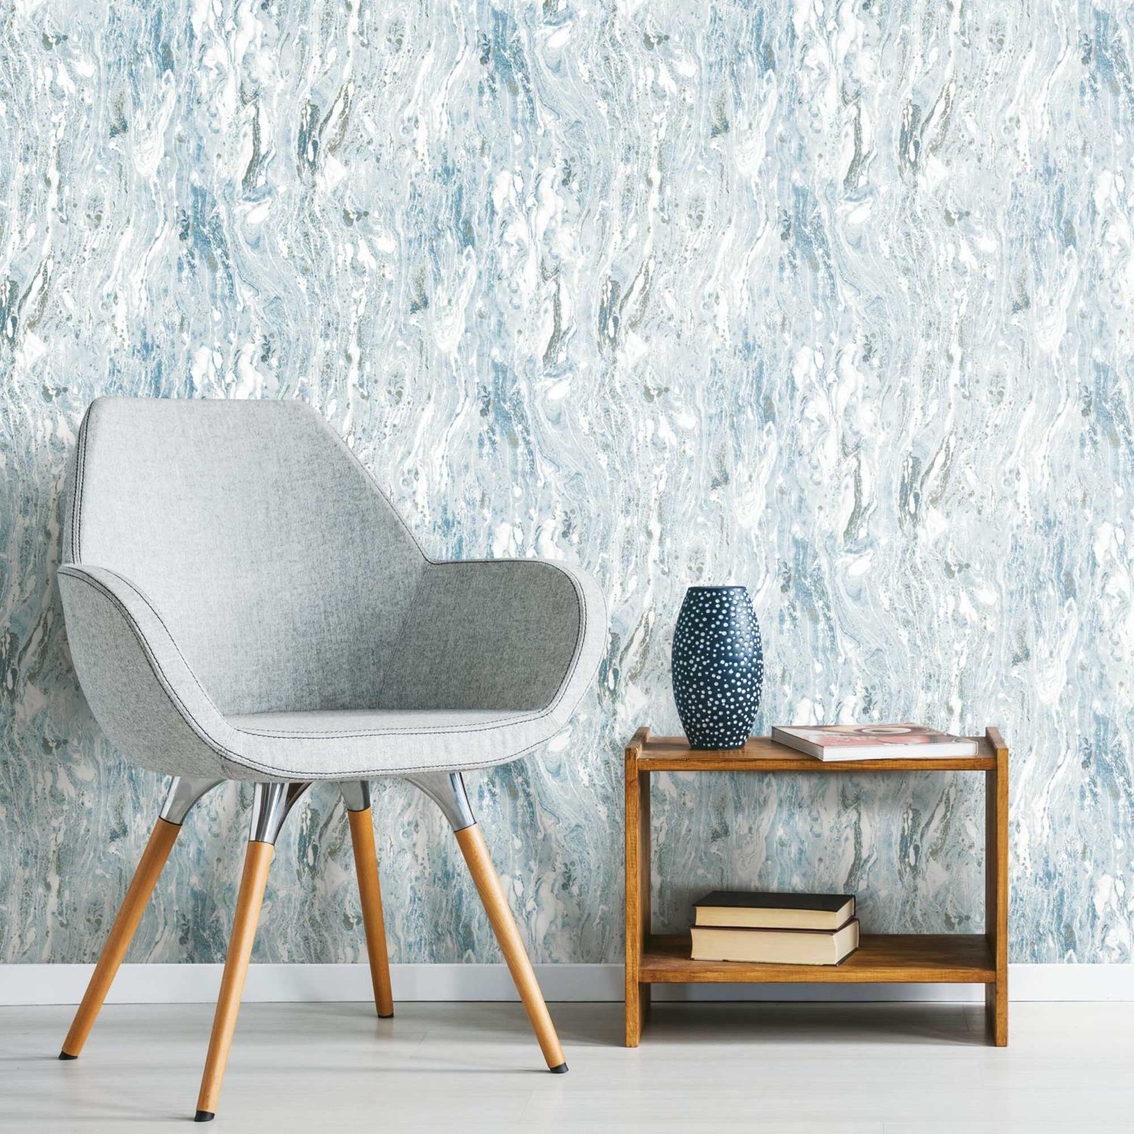 RoomMates Blue Marble Seas Peel and Stick Wallpaper - Image 8 of 10